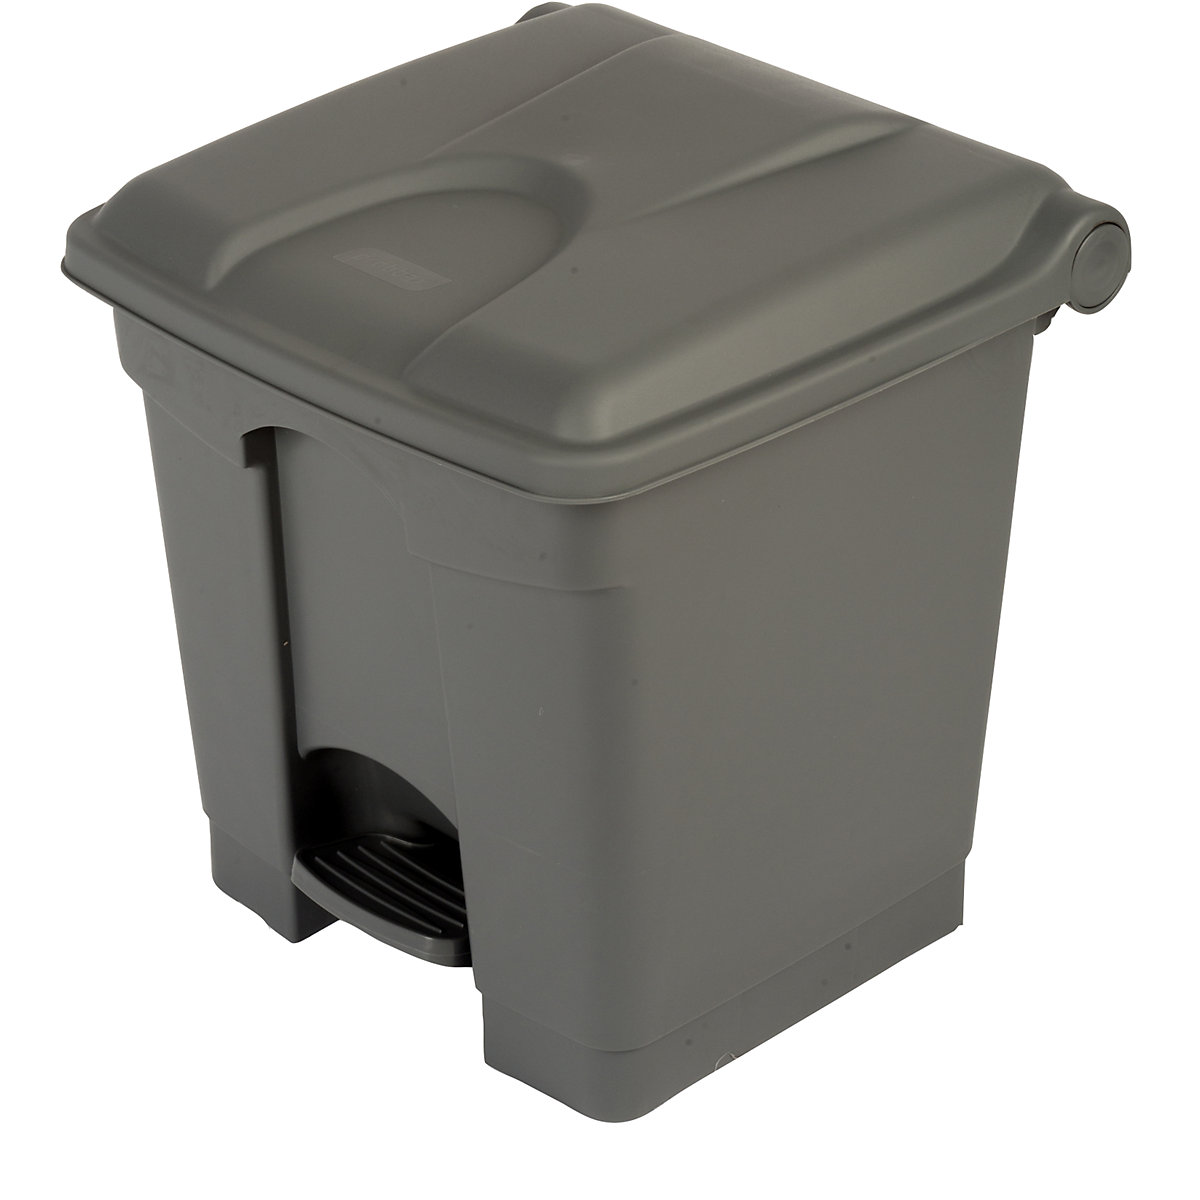 EUROKRAFTbasic – Pedal waste collector, capacity 30 l, WxHxD 410 x 435 x 400 mm, grey